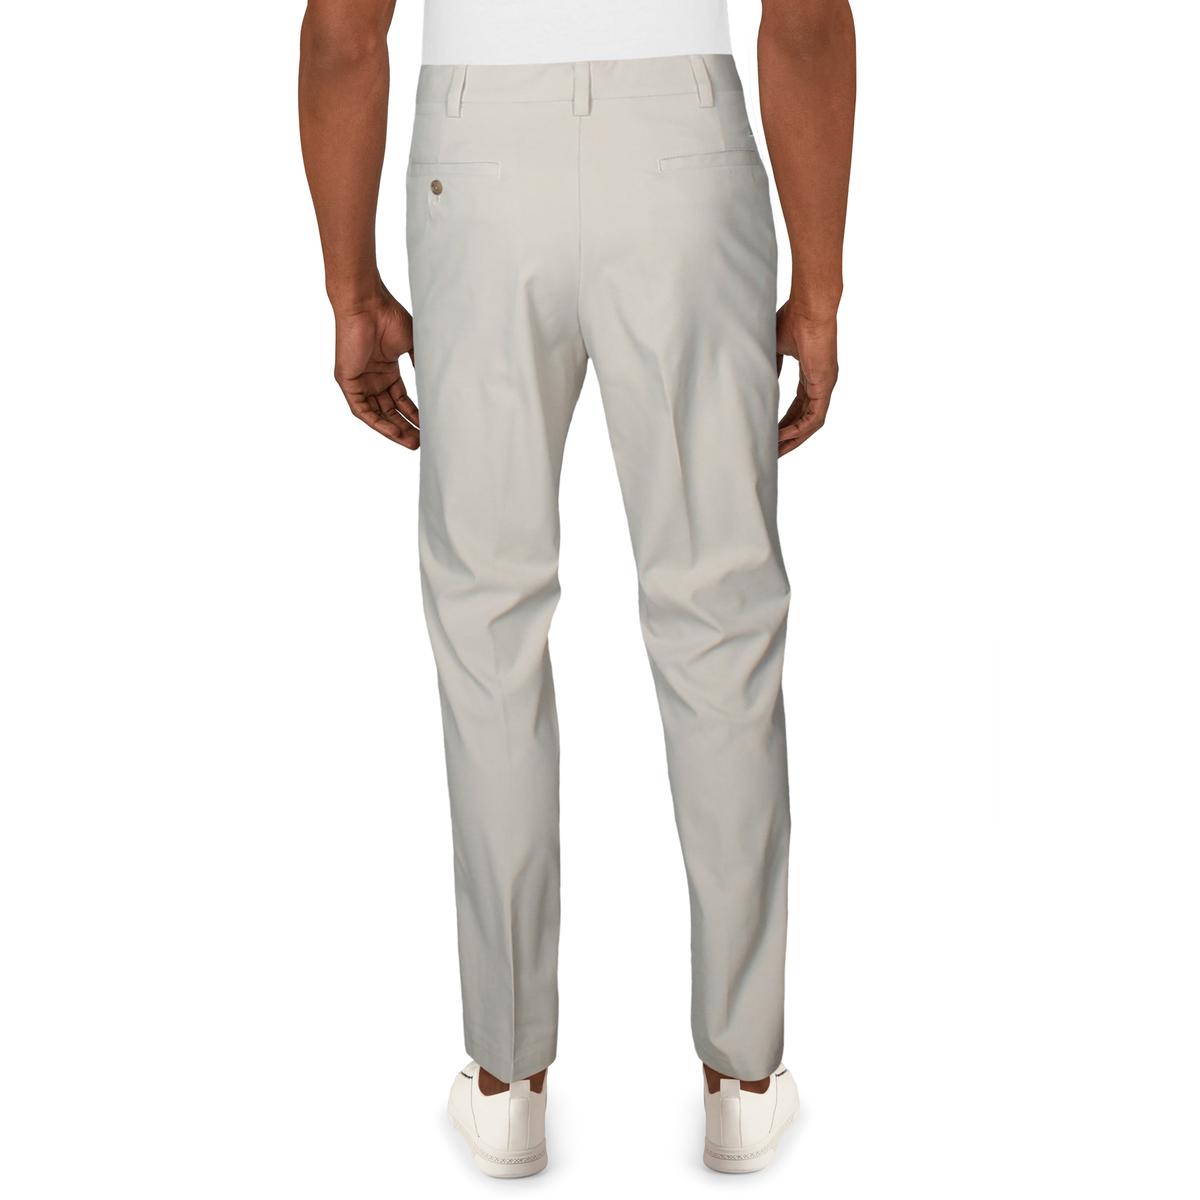 Walter Hagen Mens Slim Fit Hyro Golf Dress Pants BHFO 7317 | eBay